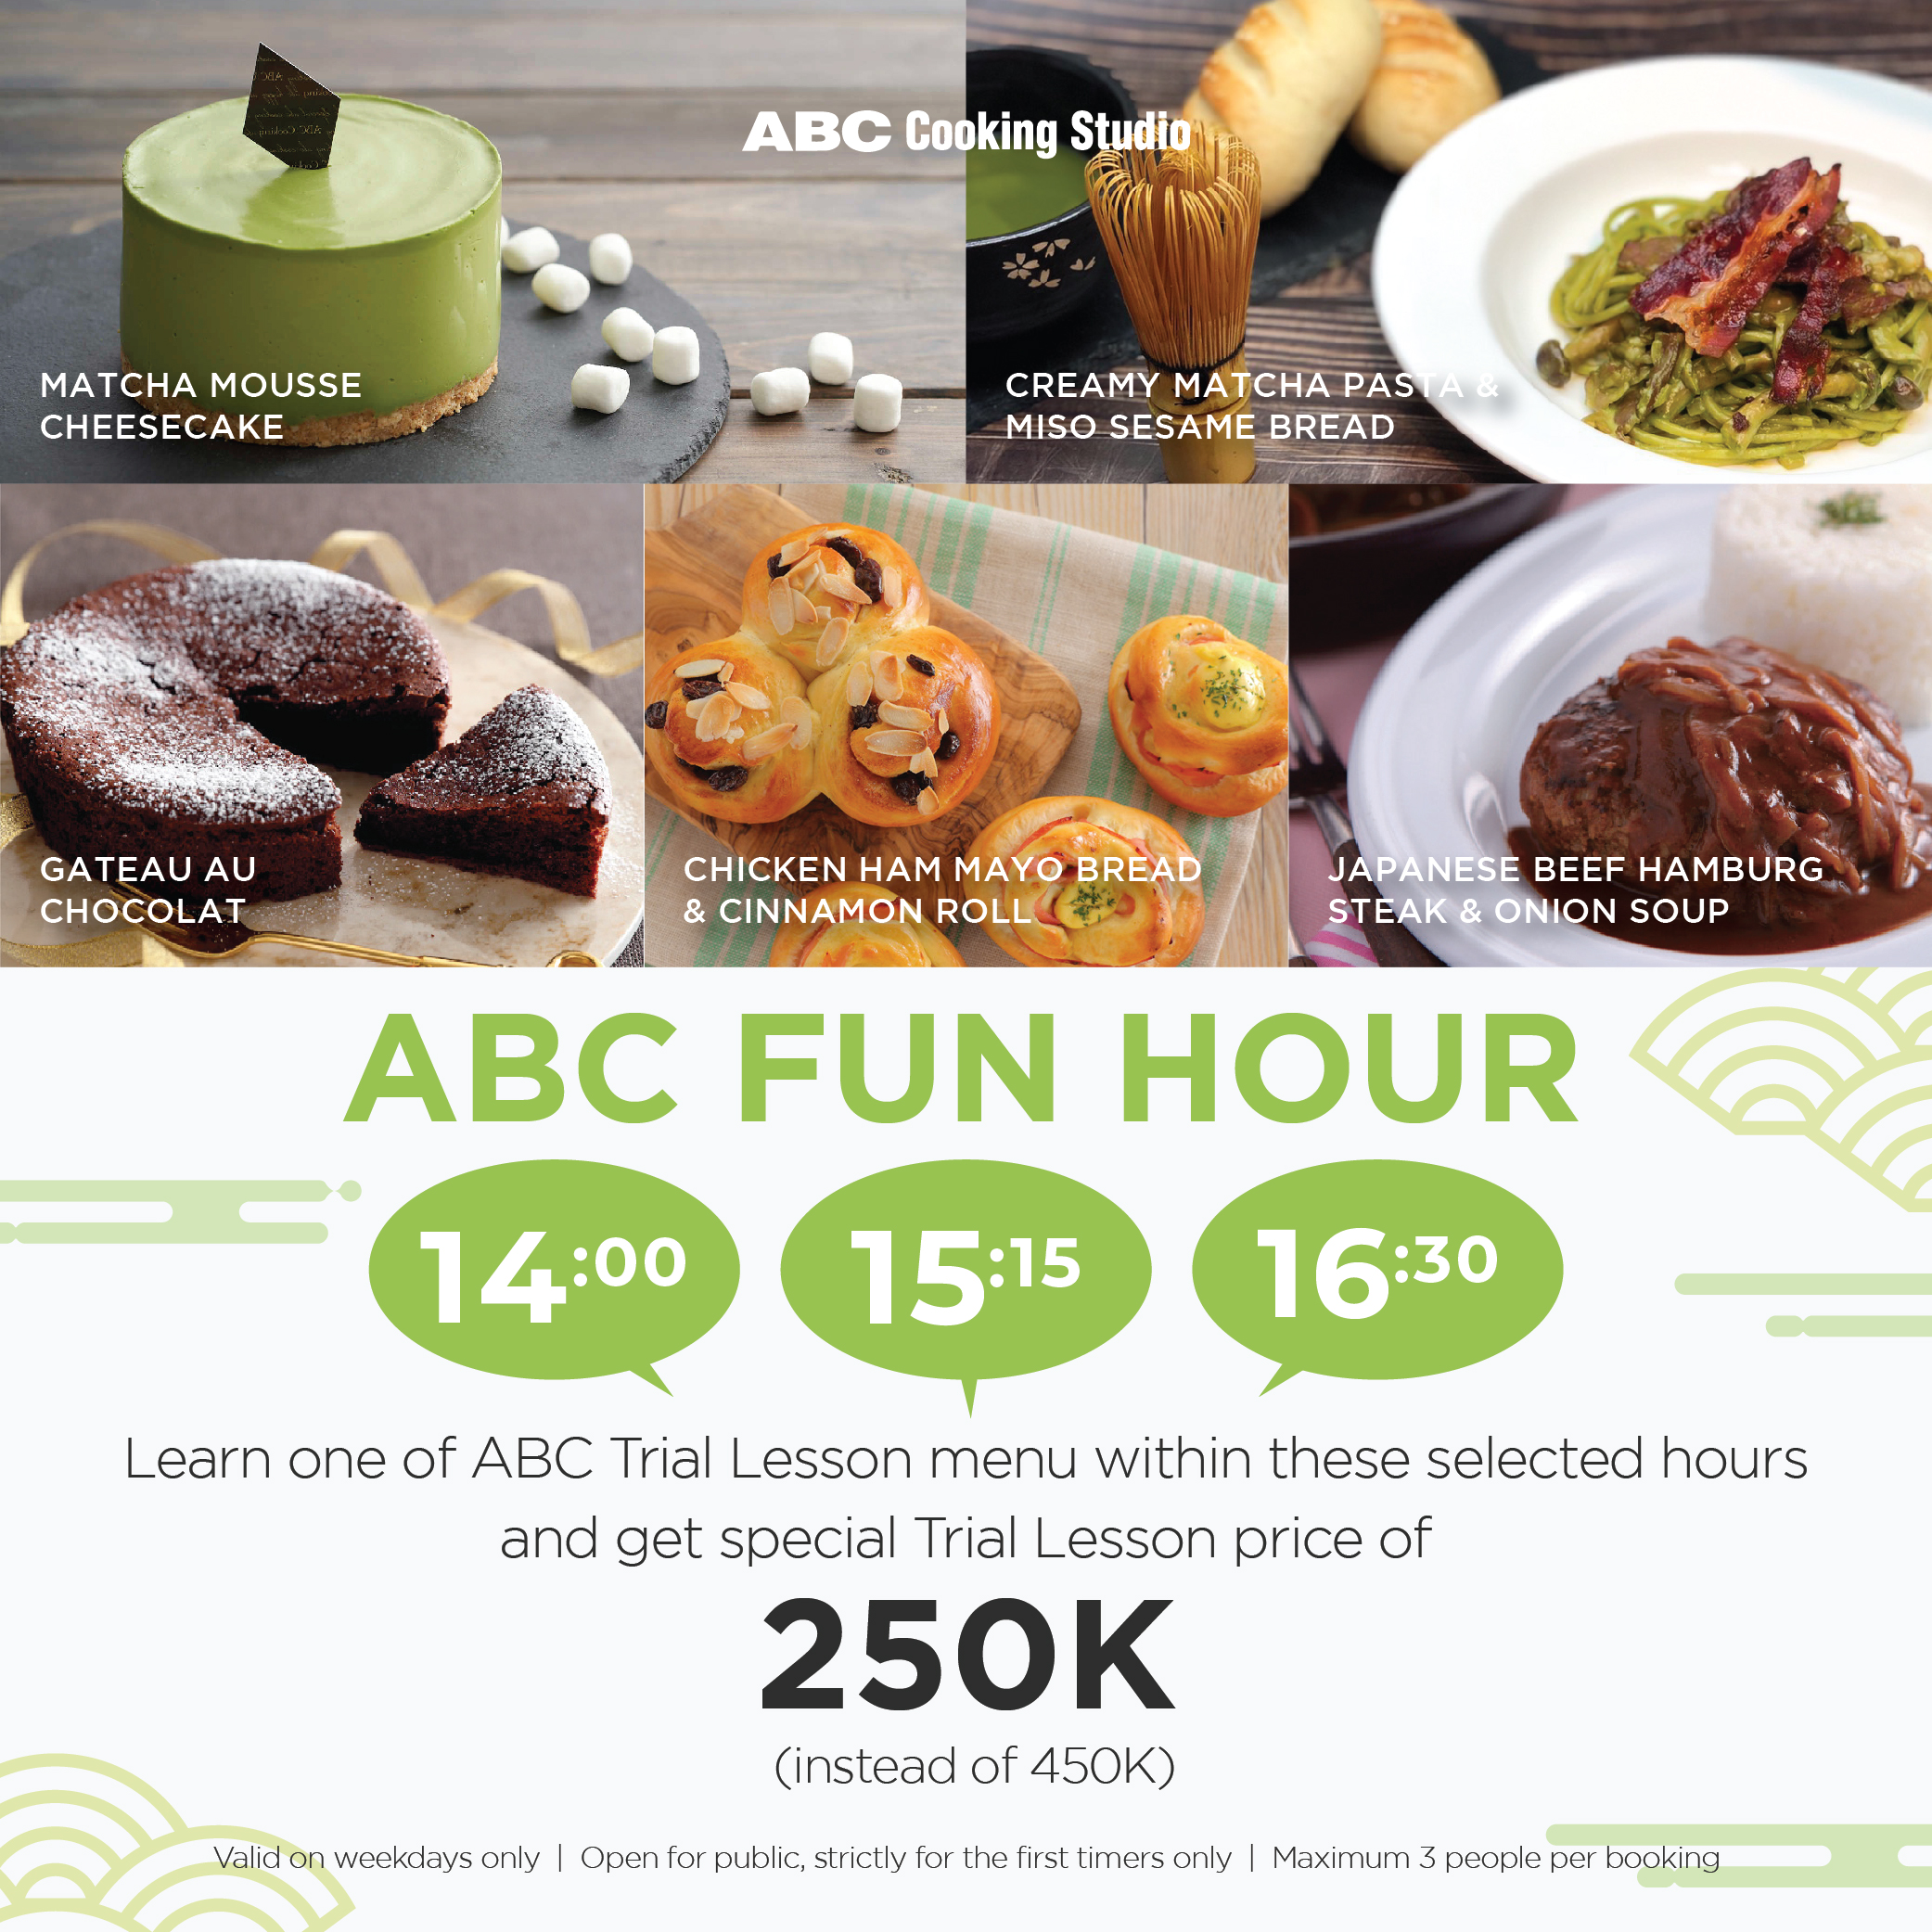 NEWS - ABC Cooking Studio Indonesia